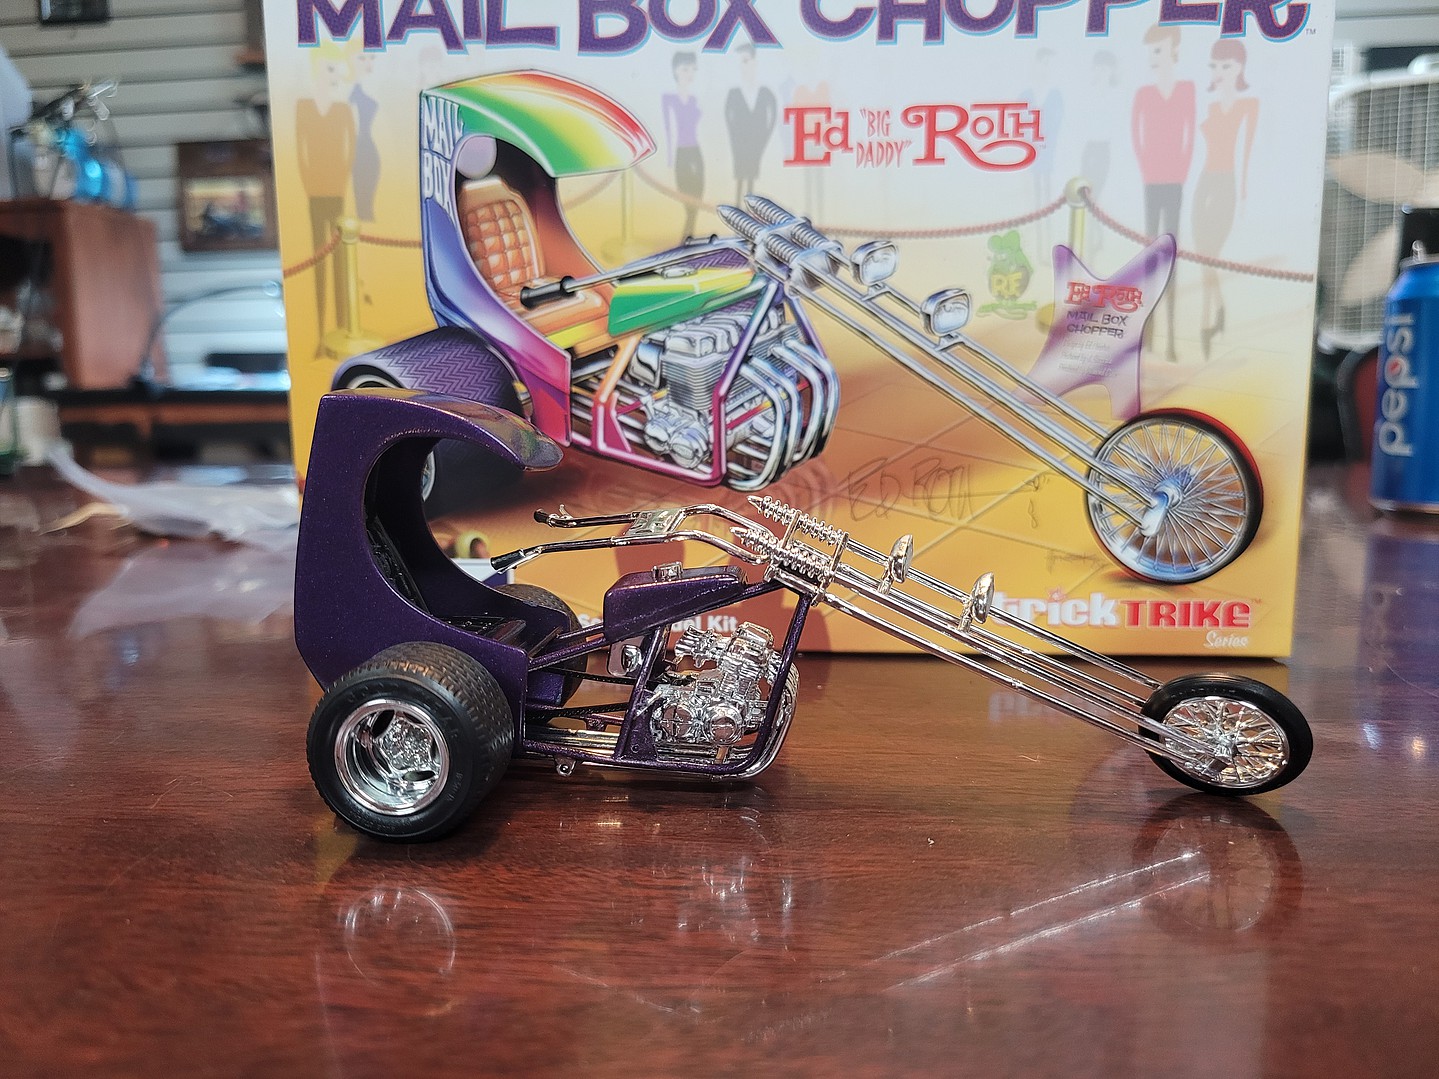 MPC Ed Roth's Mail Box Chopper (Trick Trikes Series) 1:25 Scale